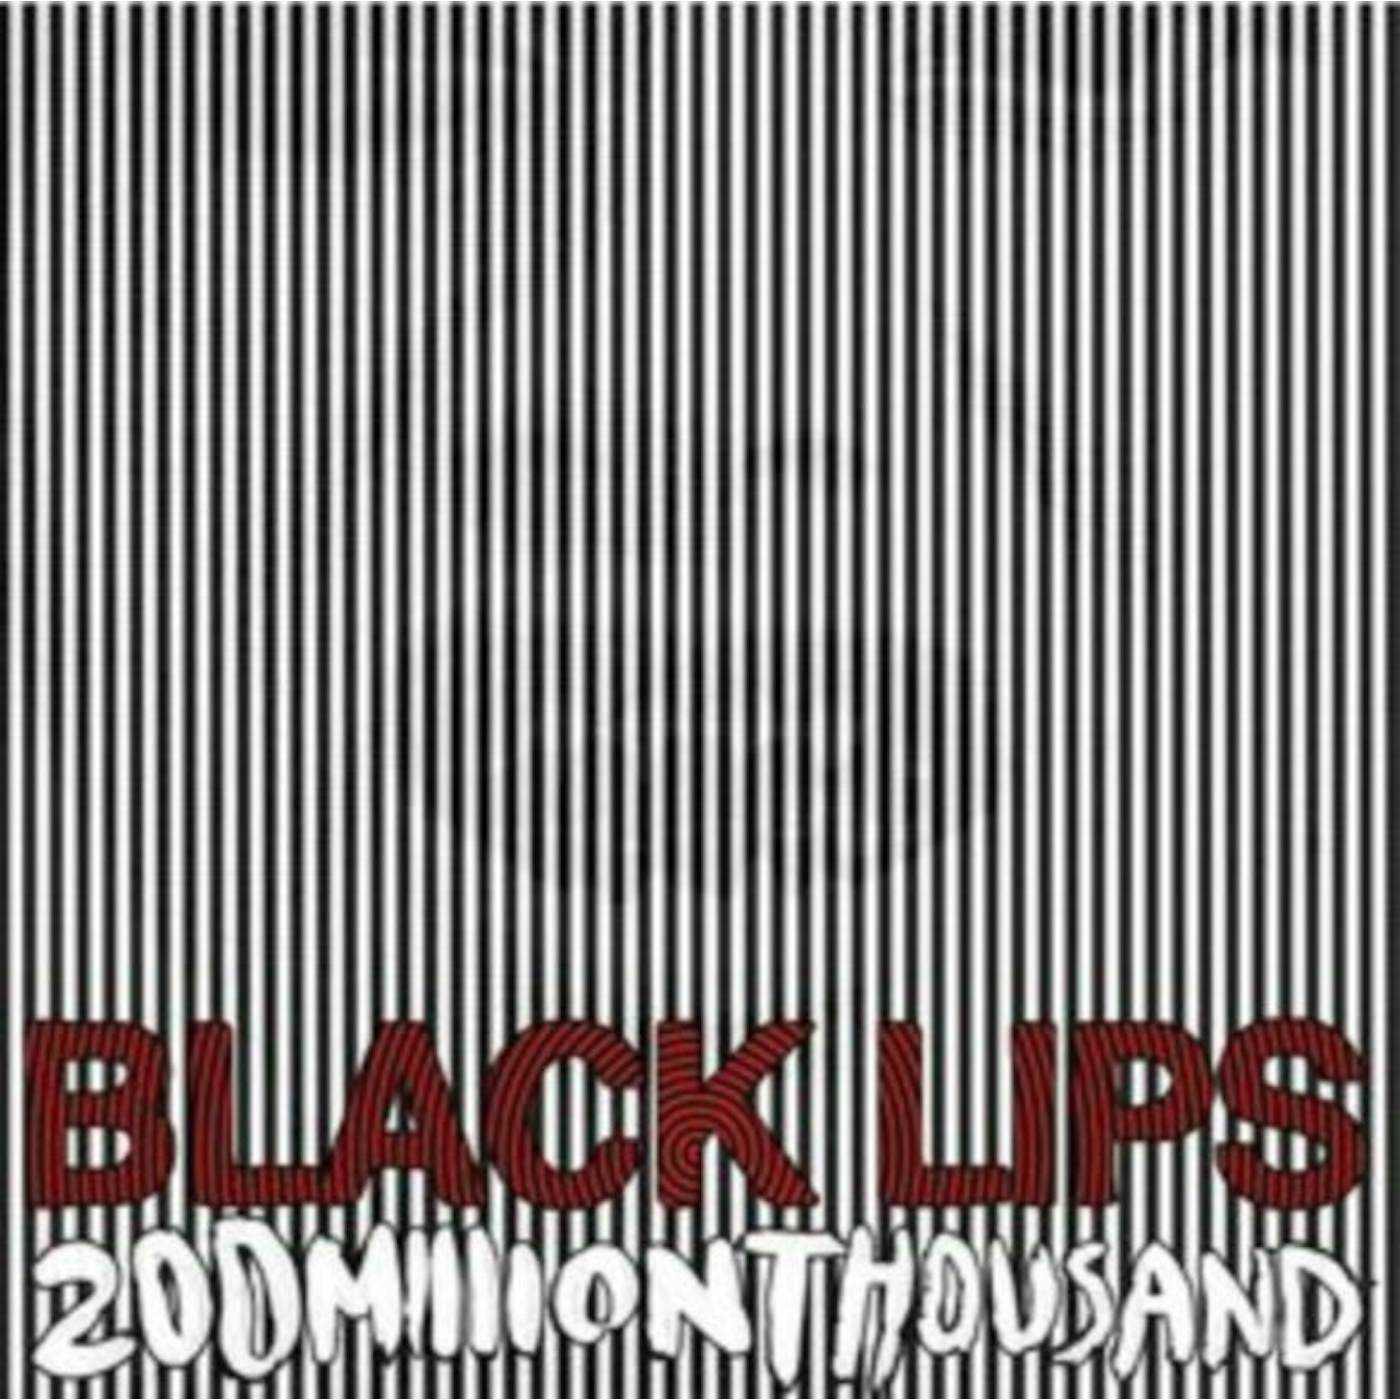  Black Lips LP - 200 Million Thousand (Vinyl)